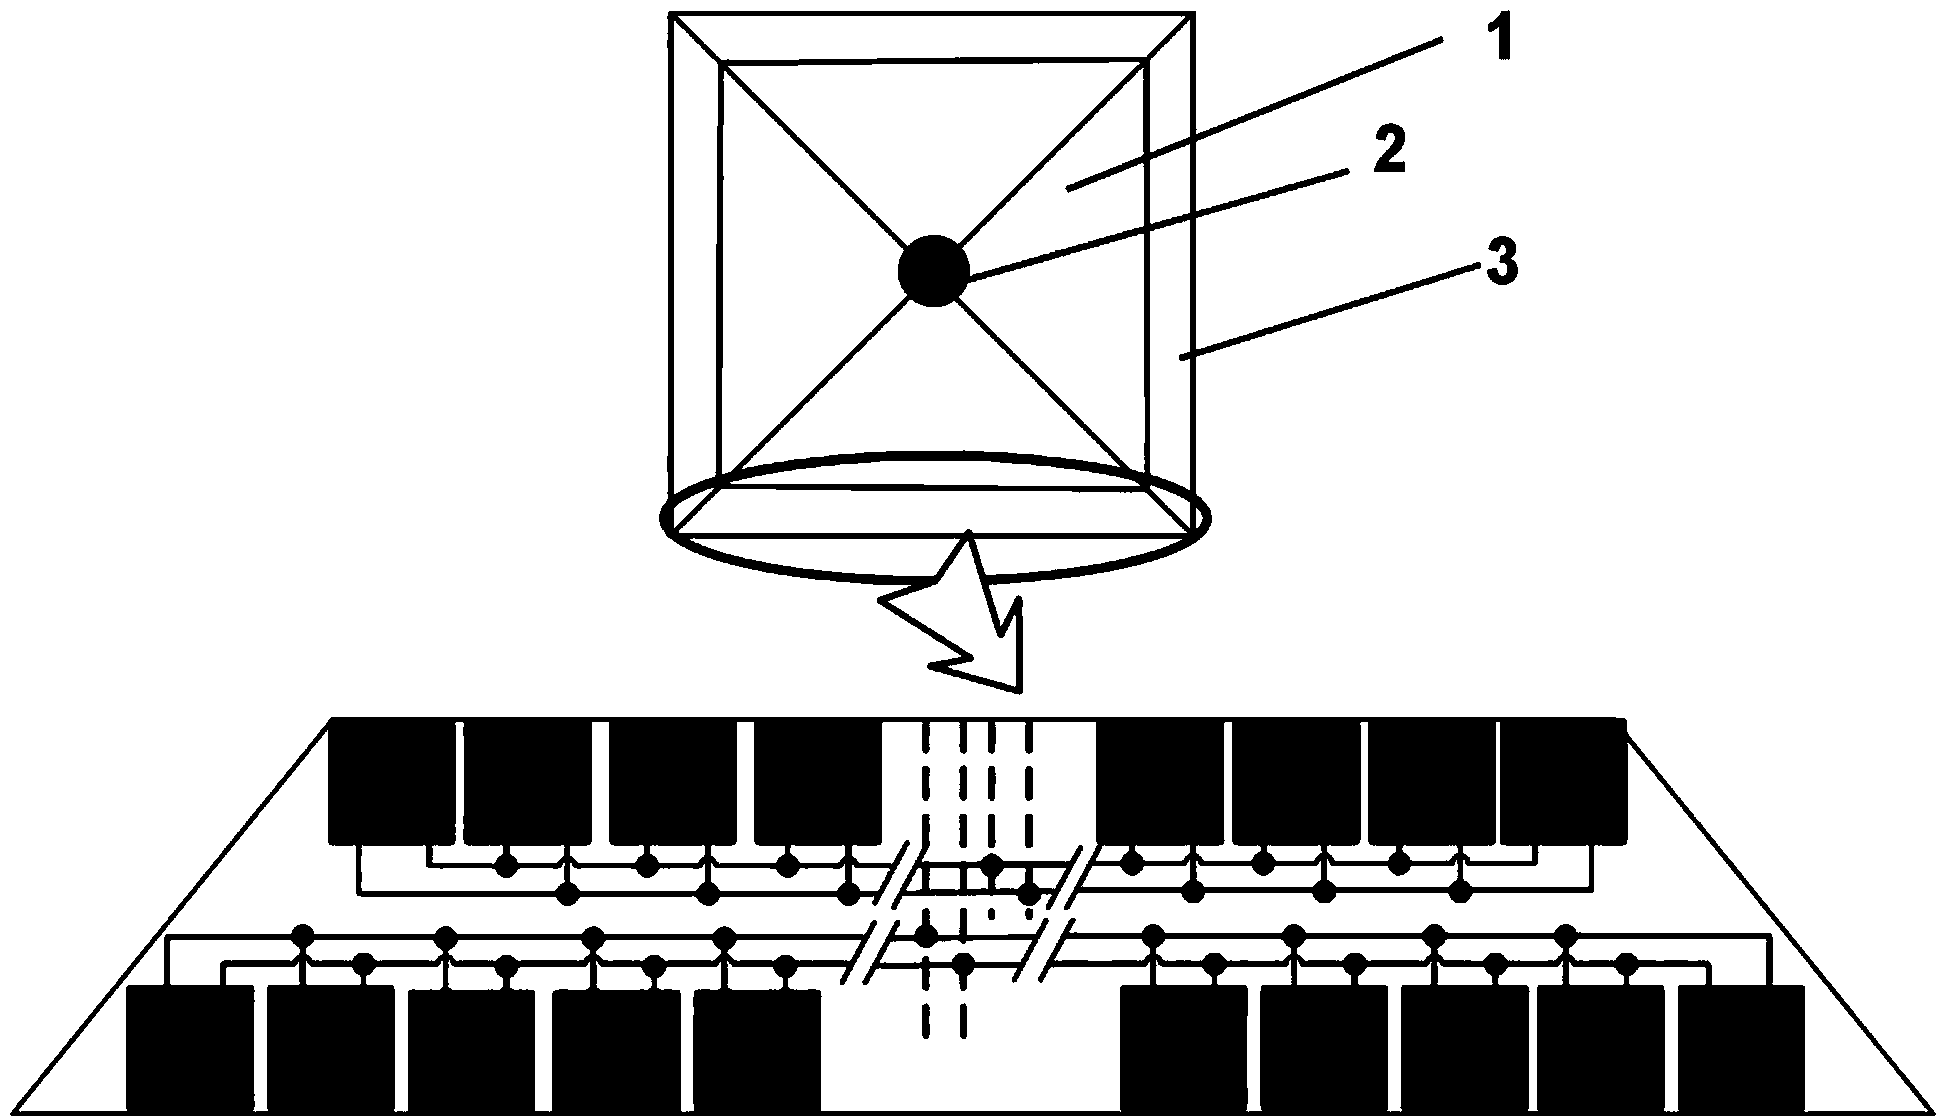 Attitude control method for solar sail spacecraft